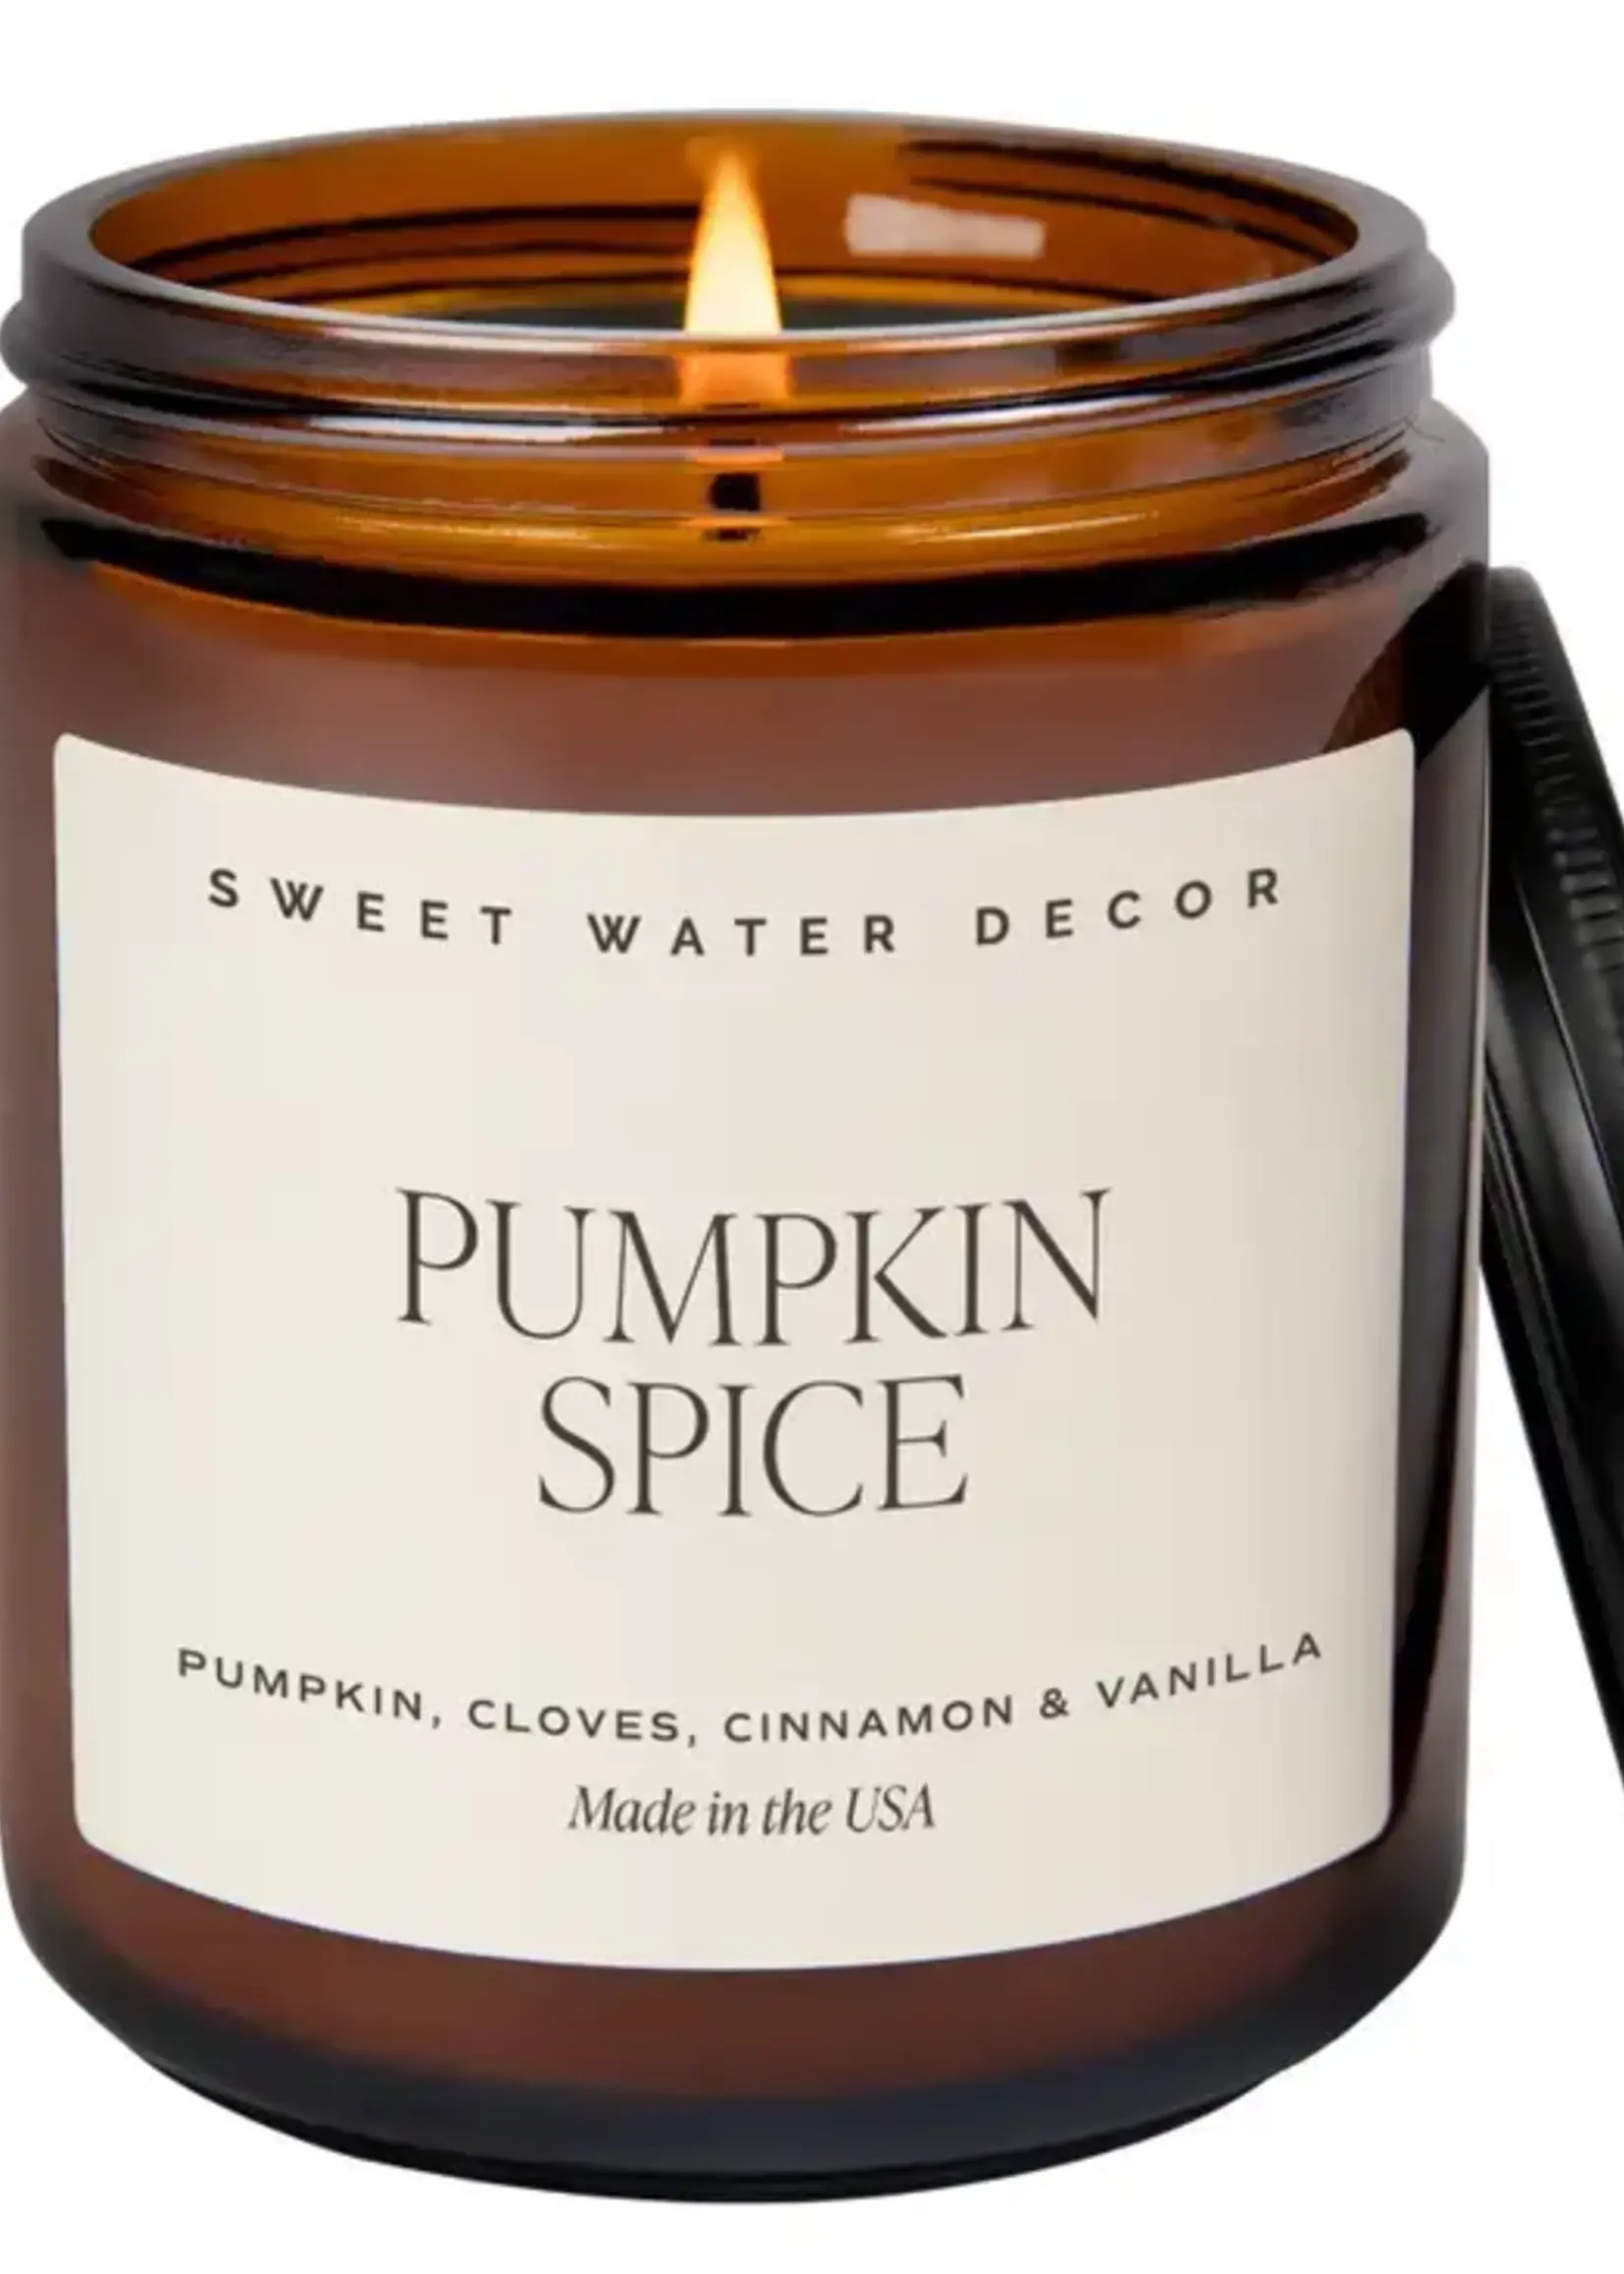 Sweet Water Decor Pumpkin Spice Candle 9oz